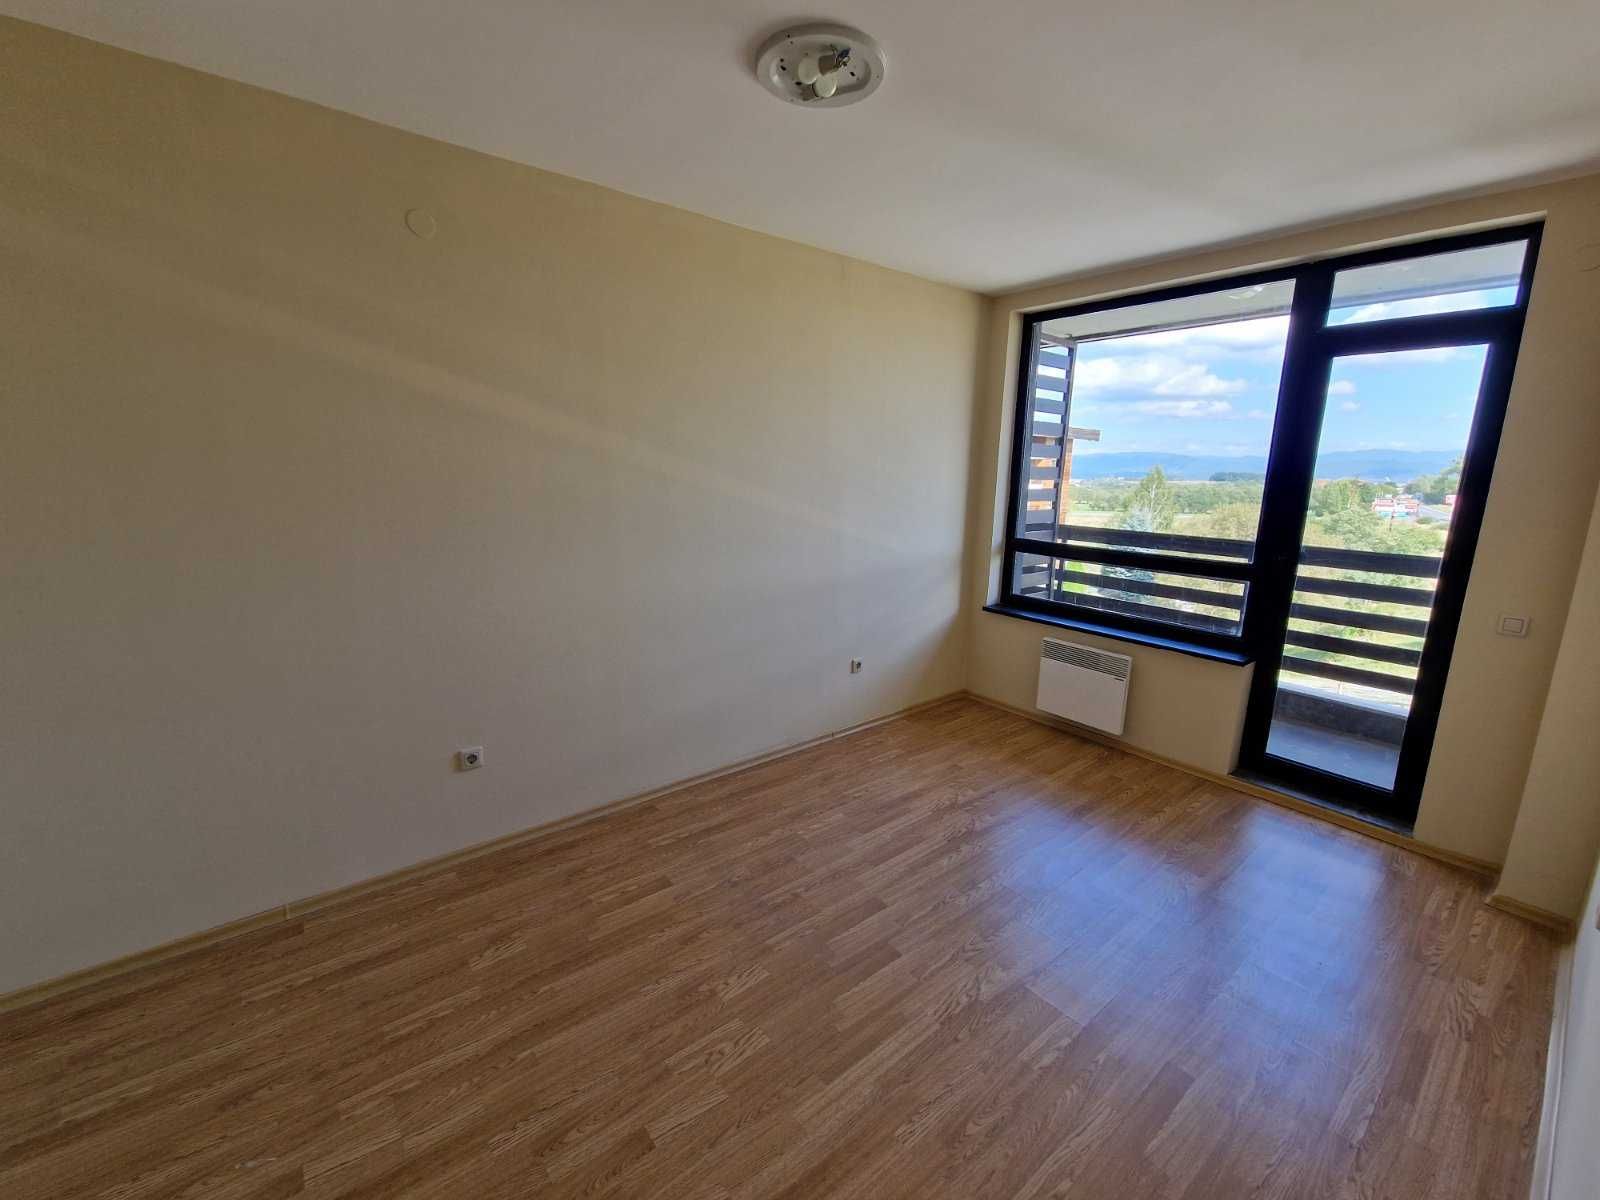 Двустаен апартамент за продажба в комплекс Аспен Валей до Разлог